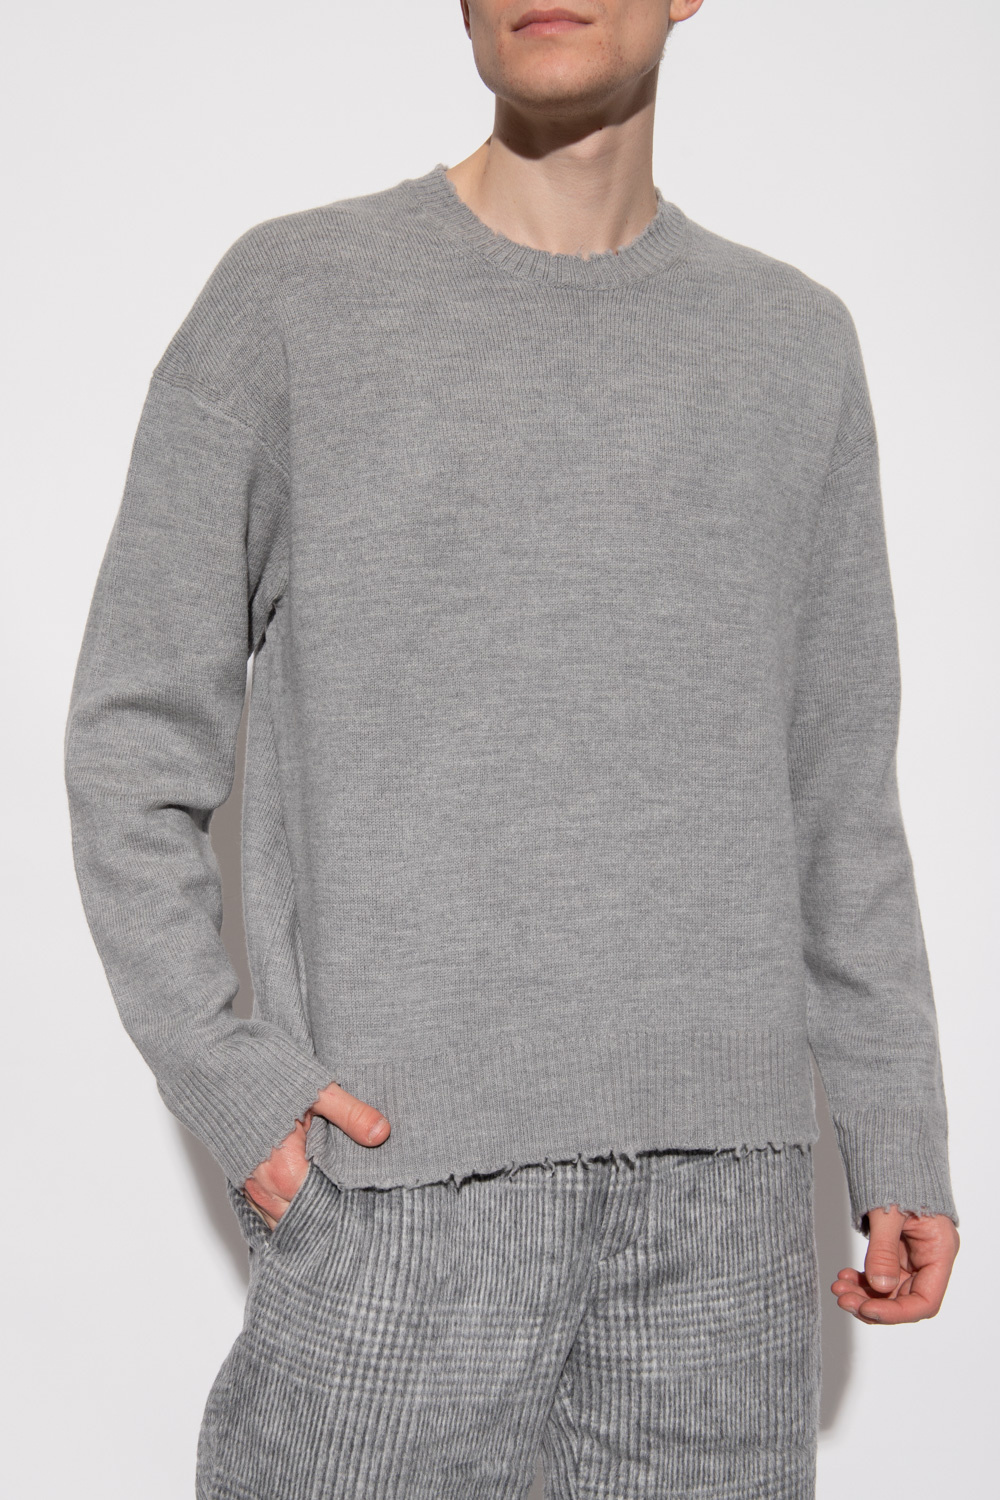 AllSaints Polk Dot Jacquard Relaxed Crew Sweater in Grey for Men